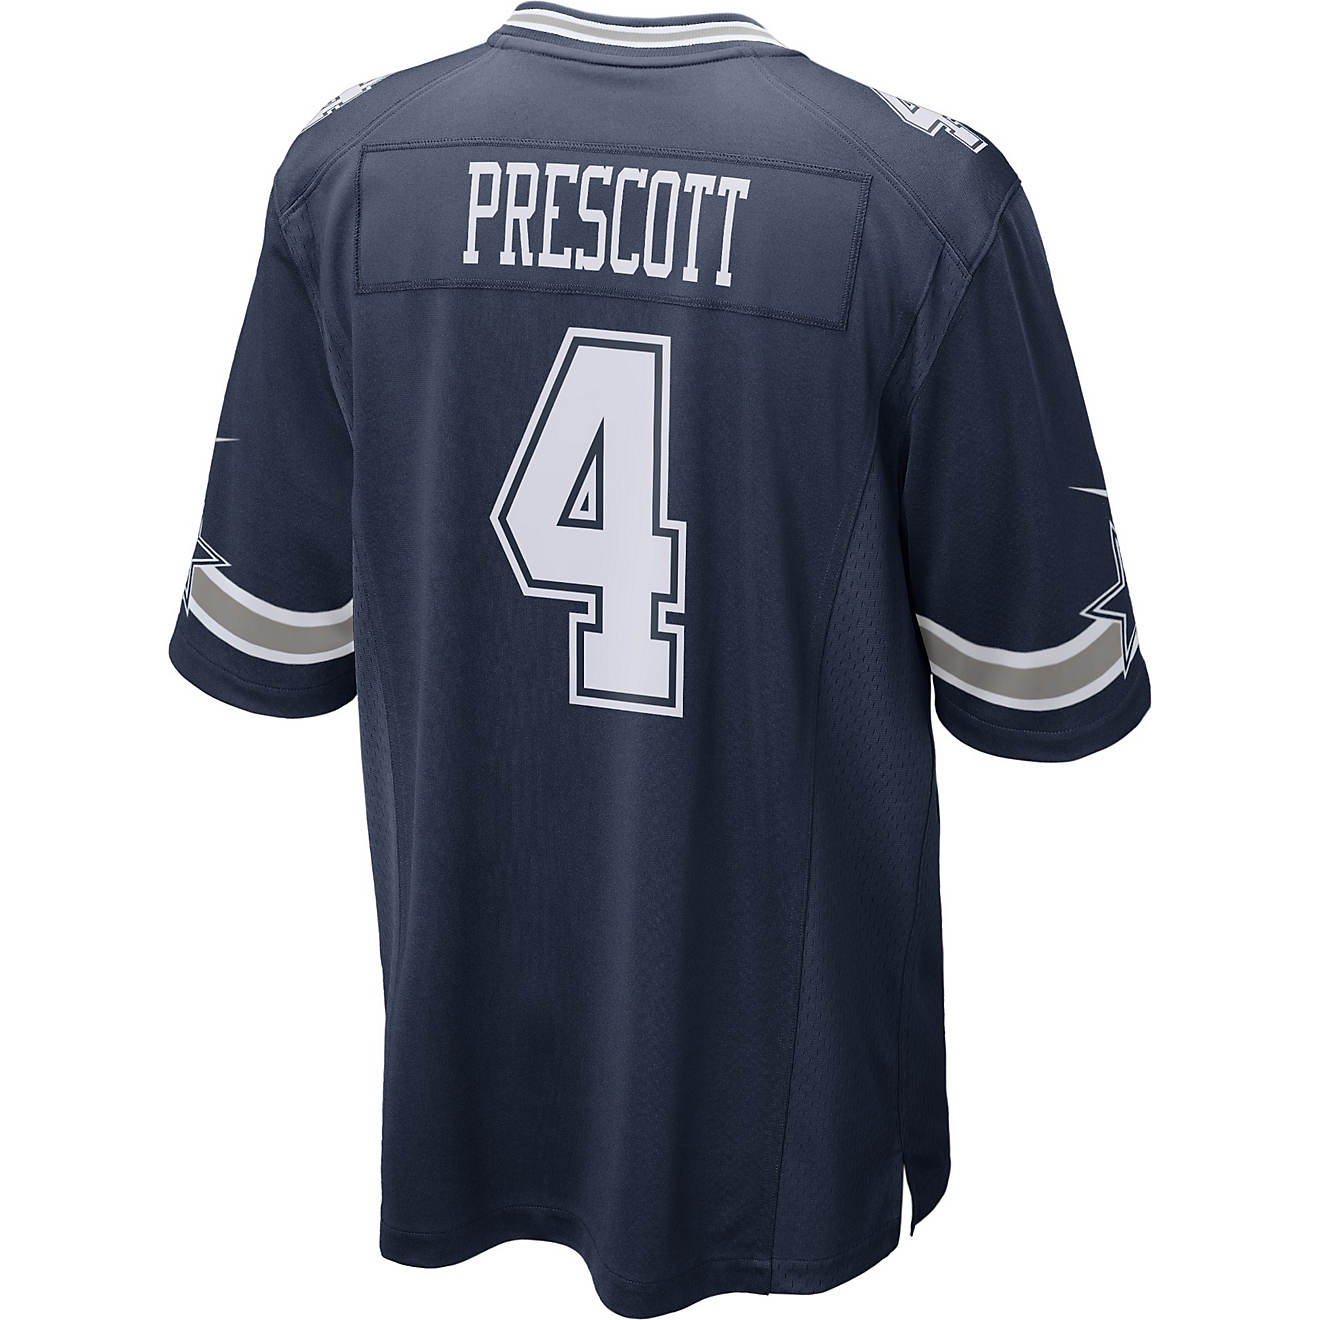 Nike Men's Dallas Cowboys Prescott Game Jersey                                                                                   - view number 1